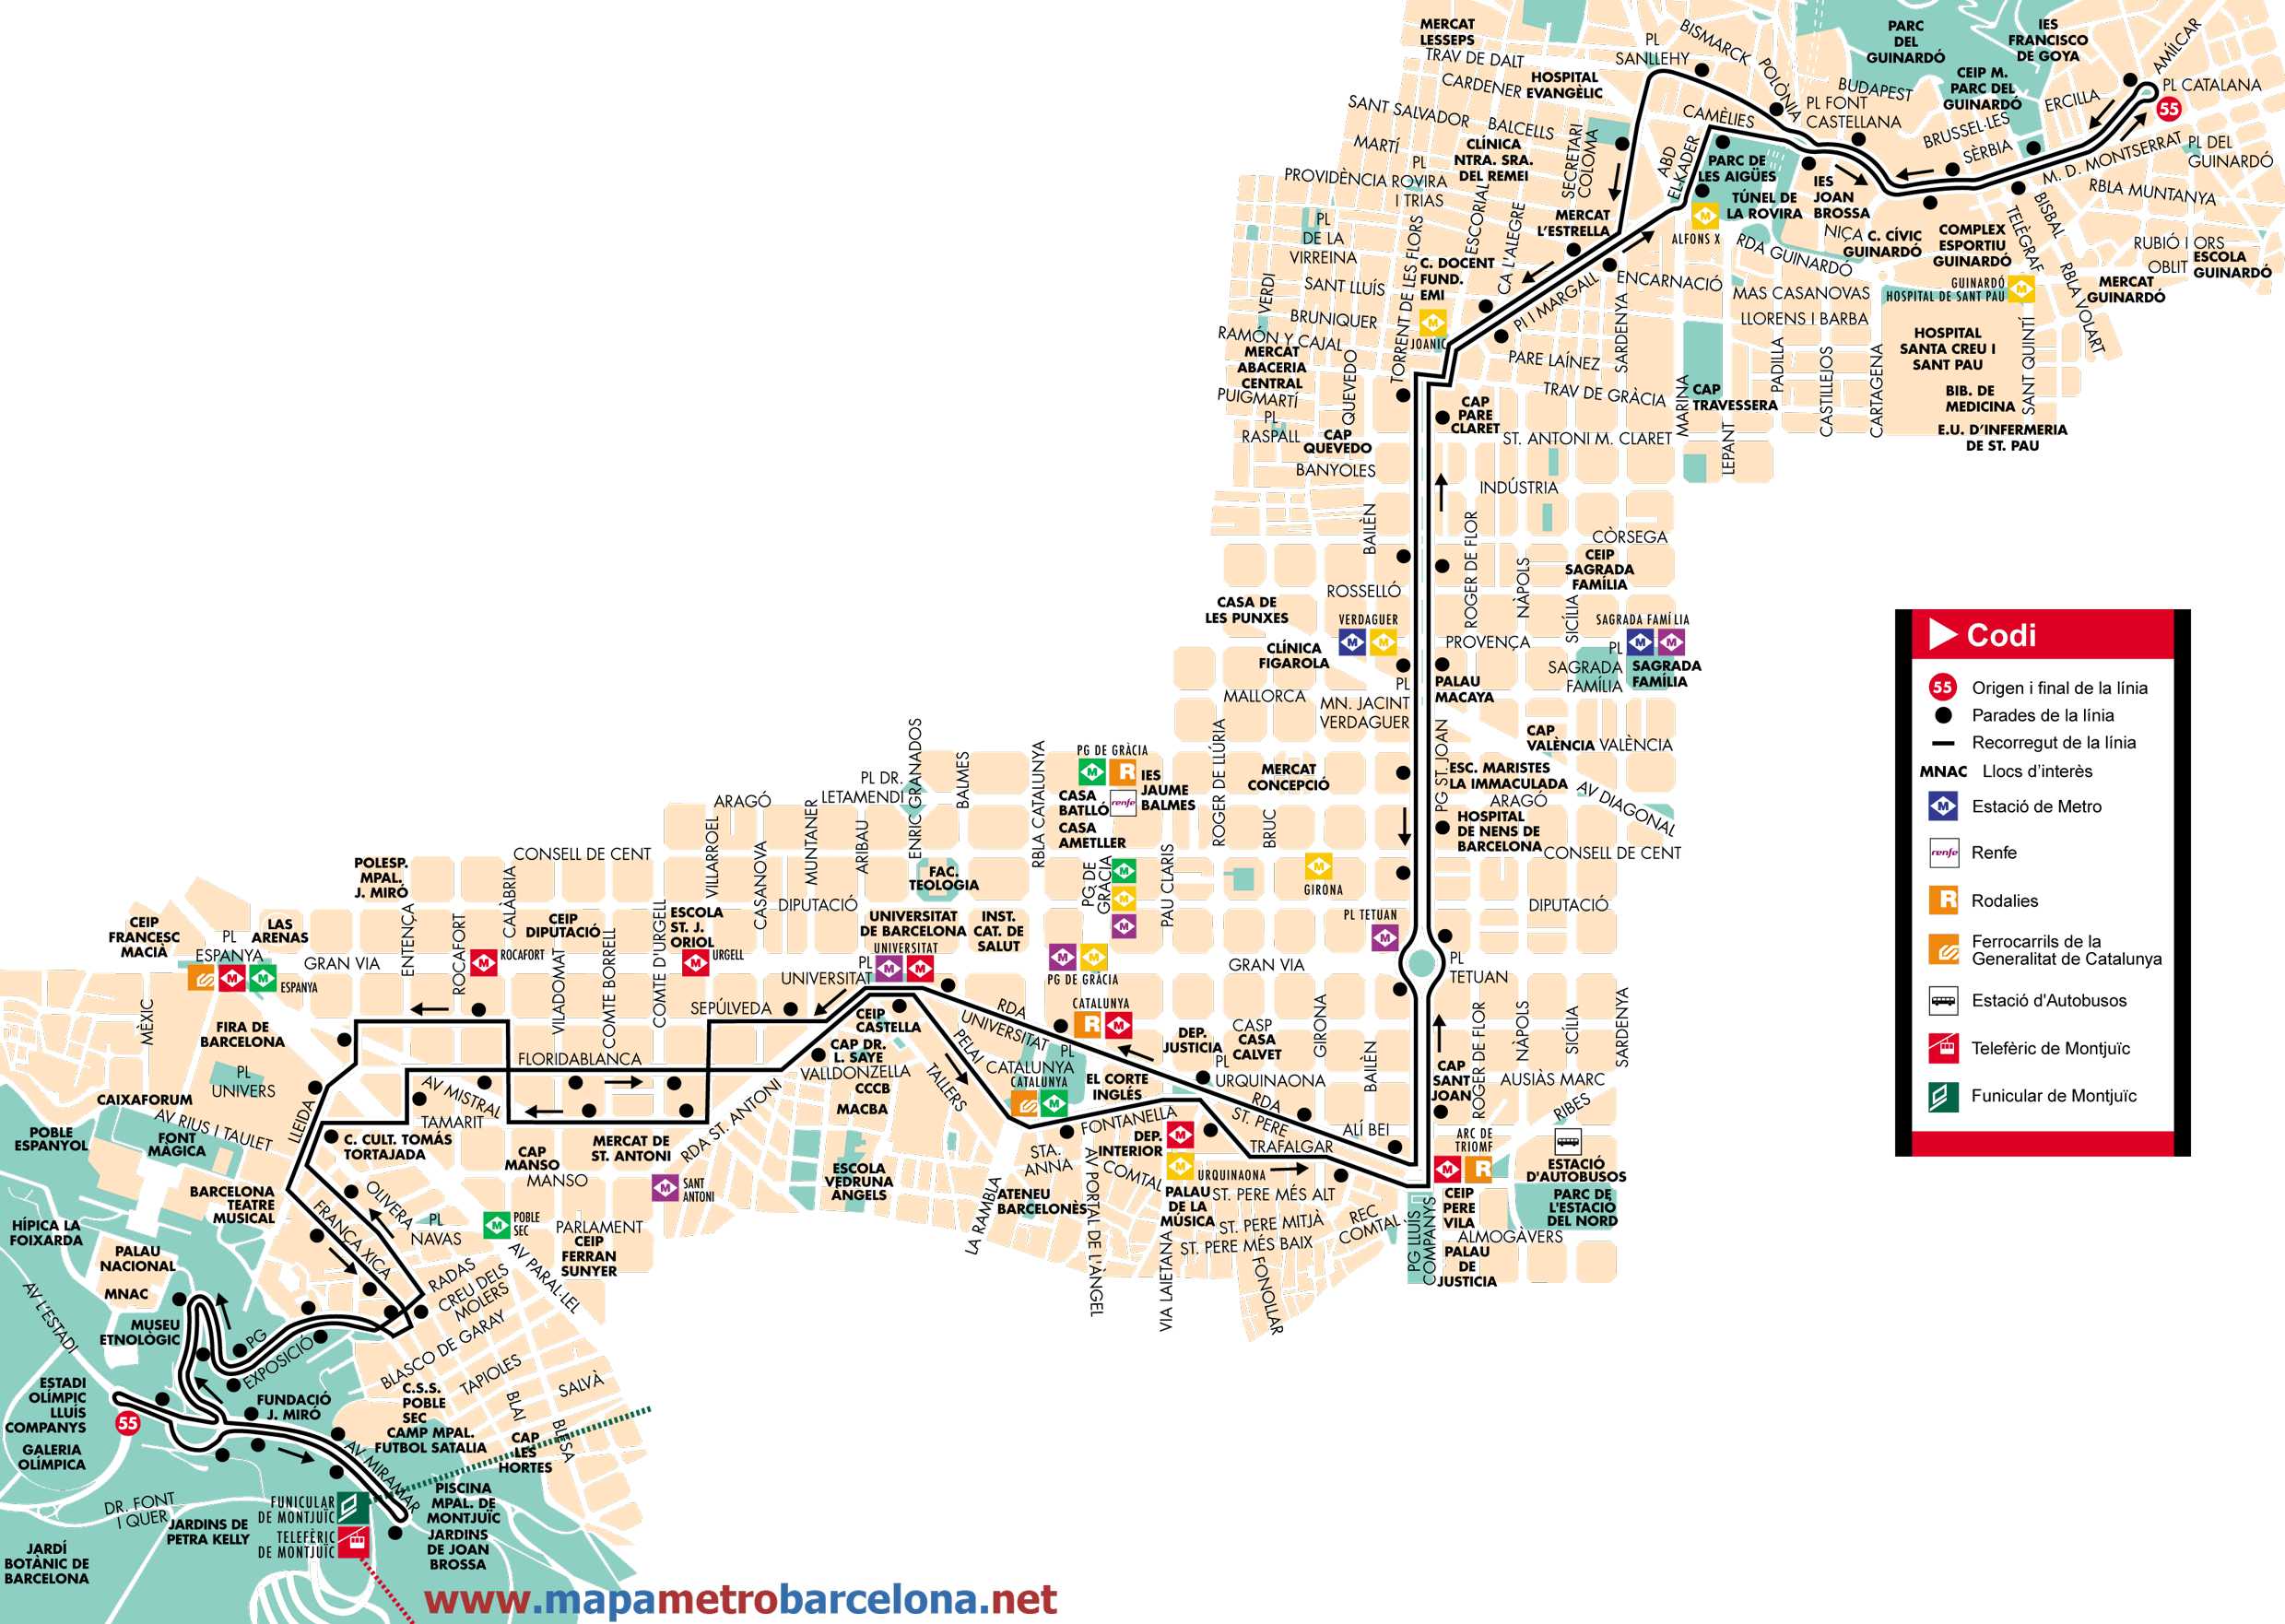 Barcelona bus map line 55